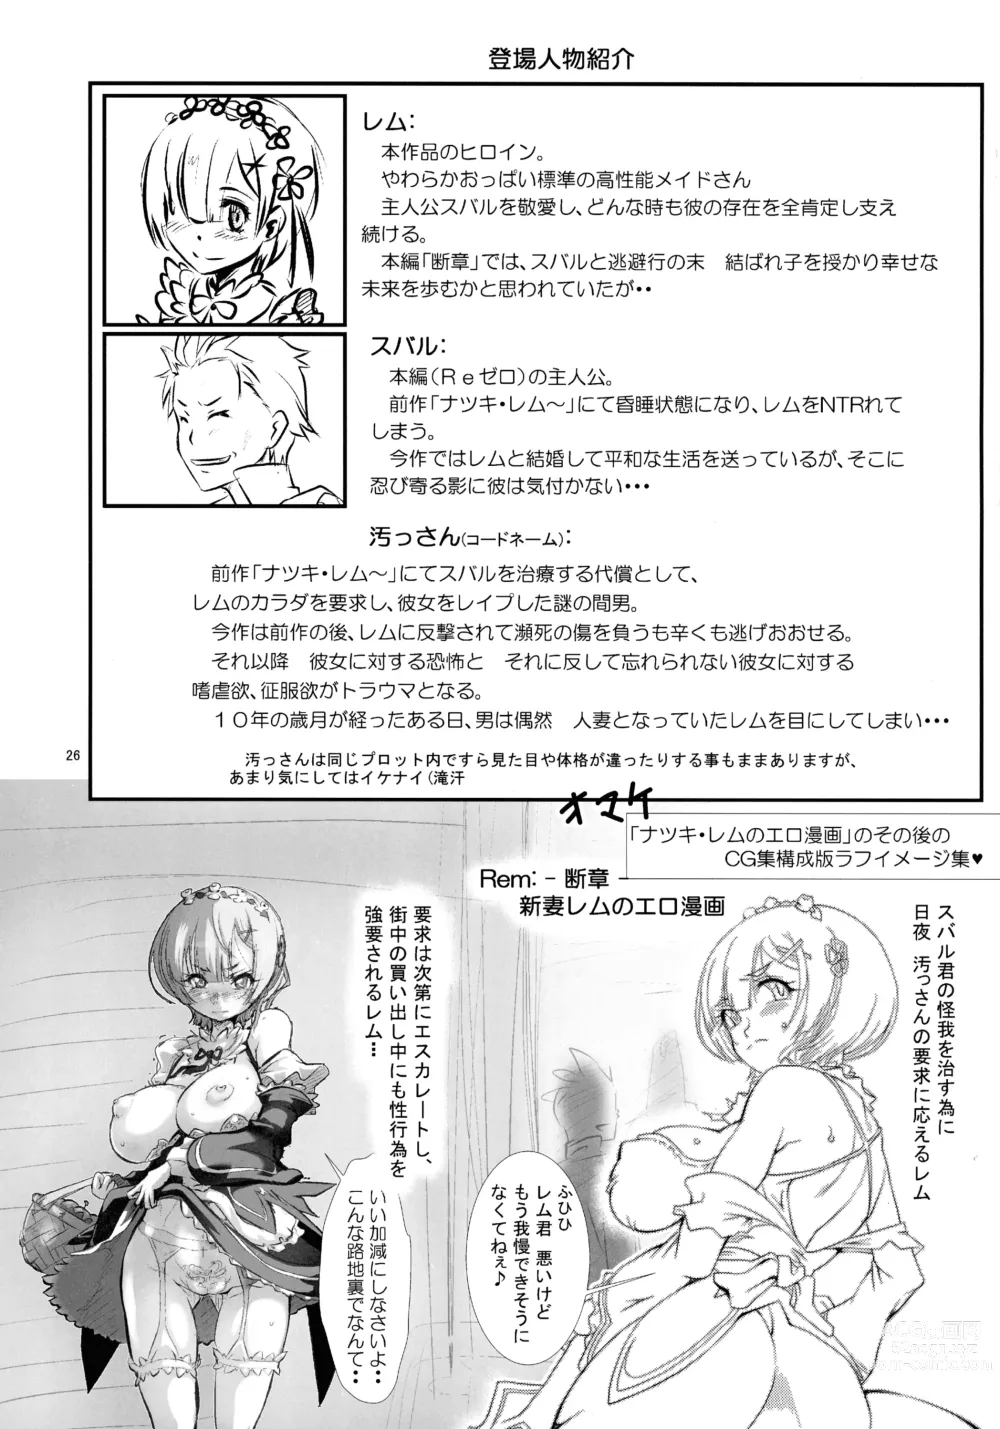 Page 26 of doujinshi Rem: Rem Danshou Hitozuma Rem no Ero Manga Pairotto-ban